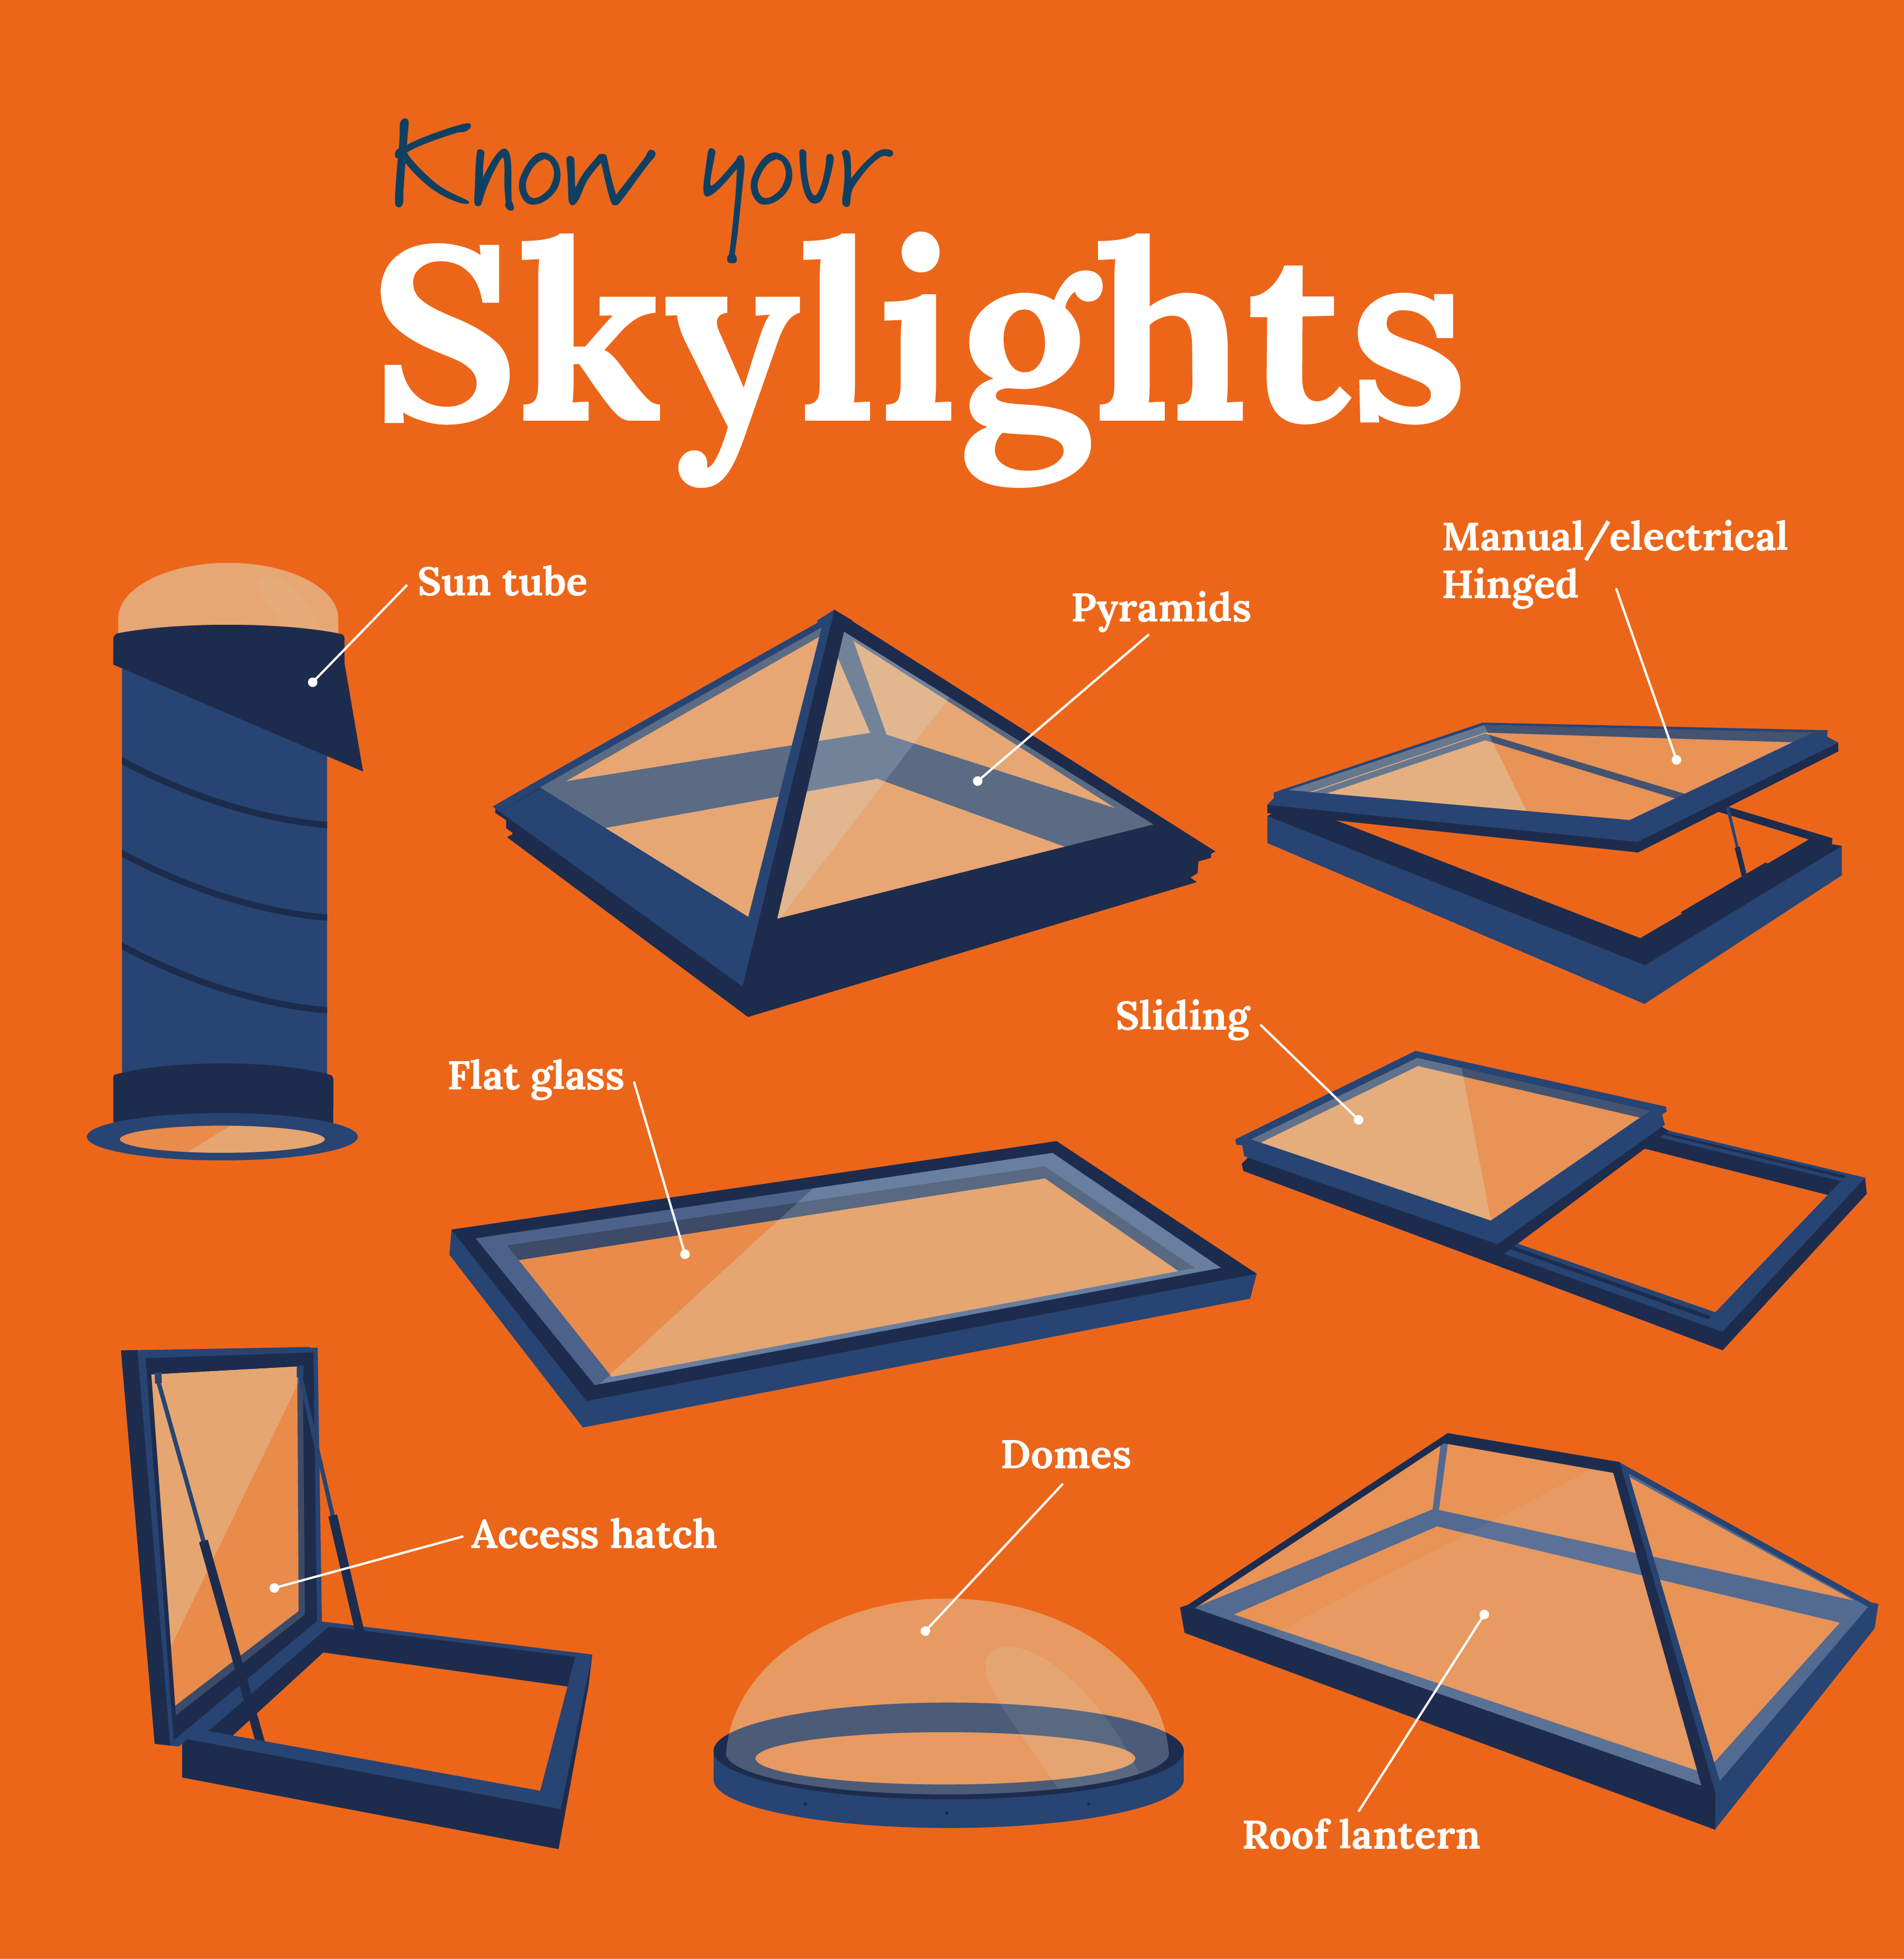 skylight infographic final-01 copy